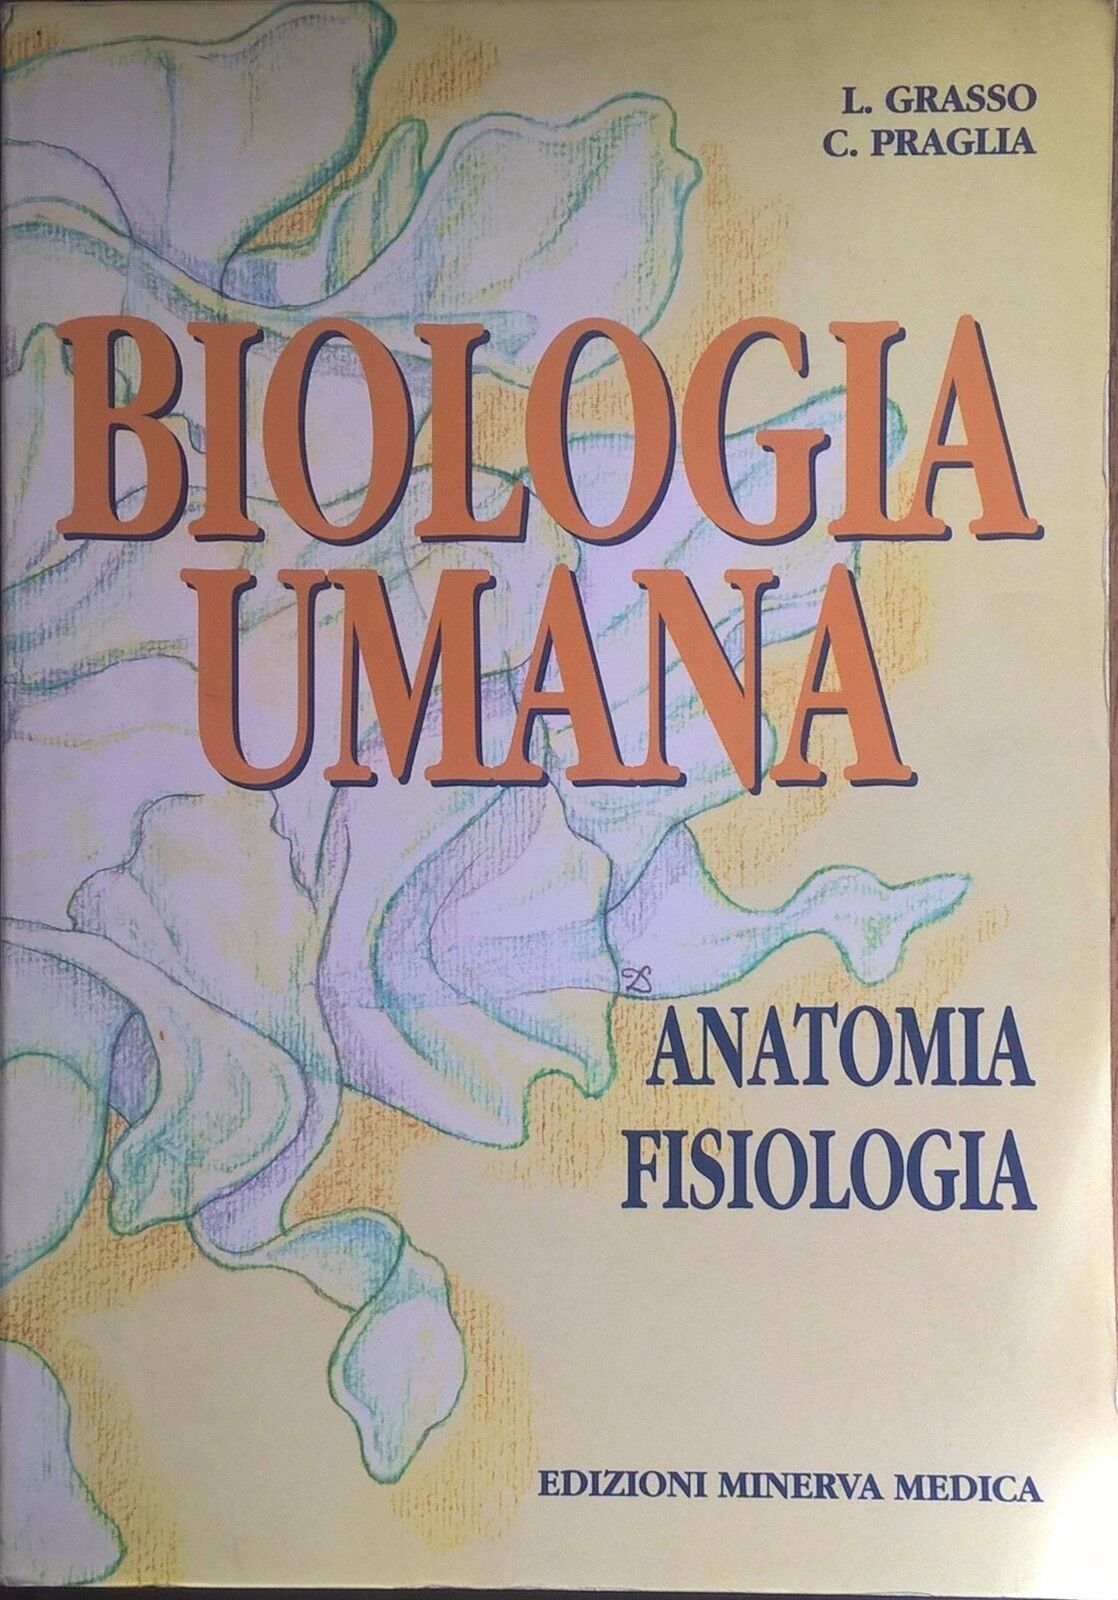 Biologia umana: Anatomia e Fisiologia - Grasso Praglia (Minerva 1998) Ca